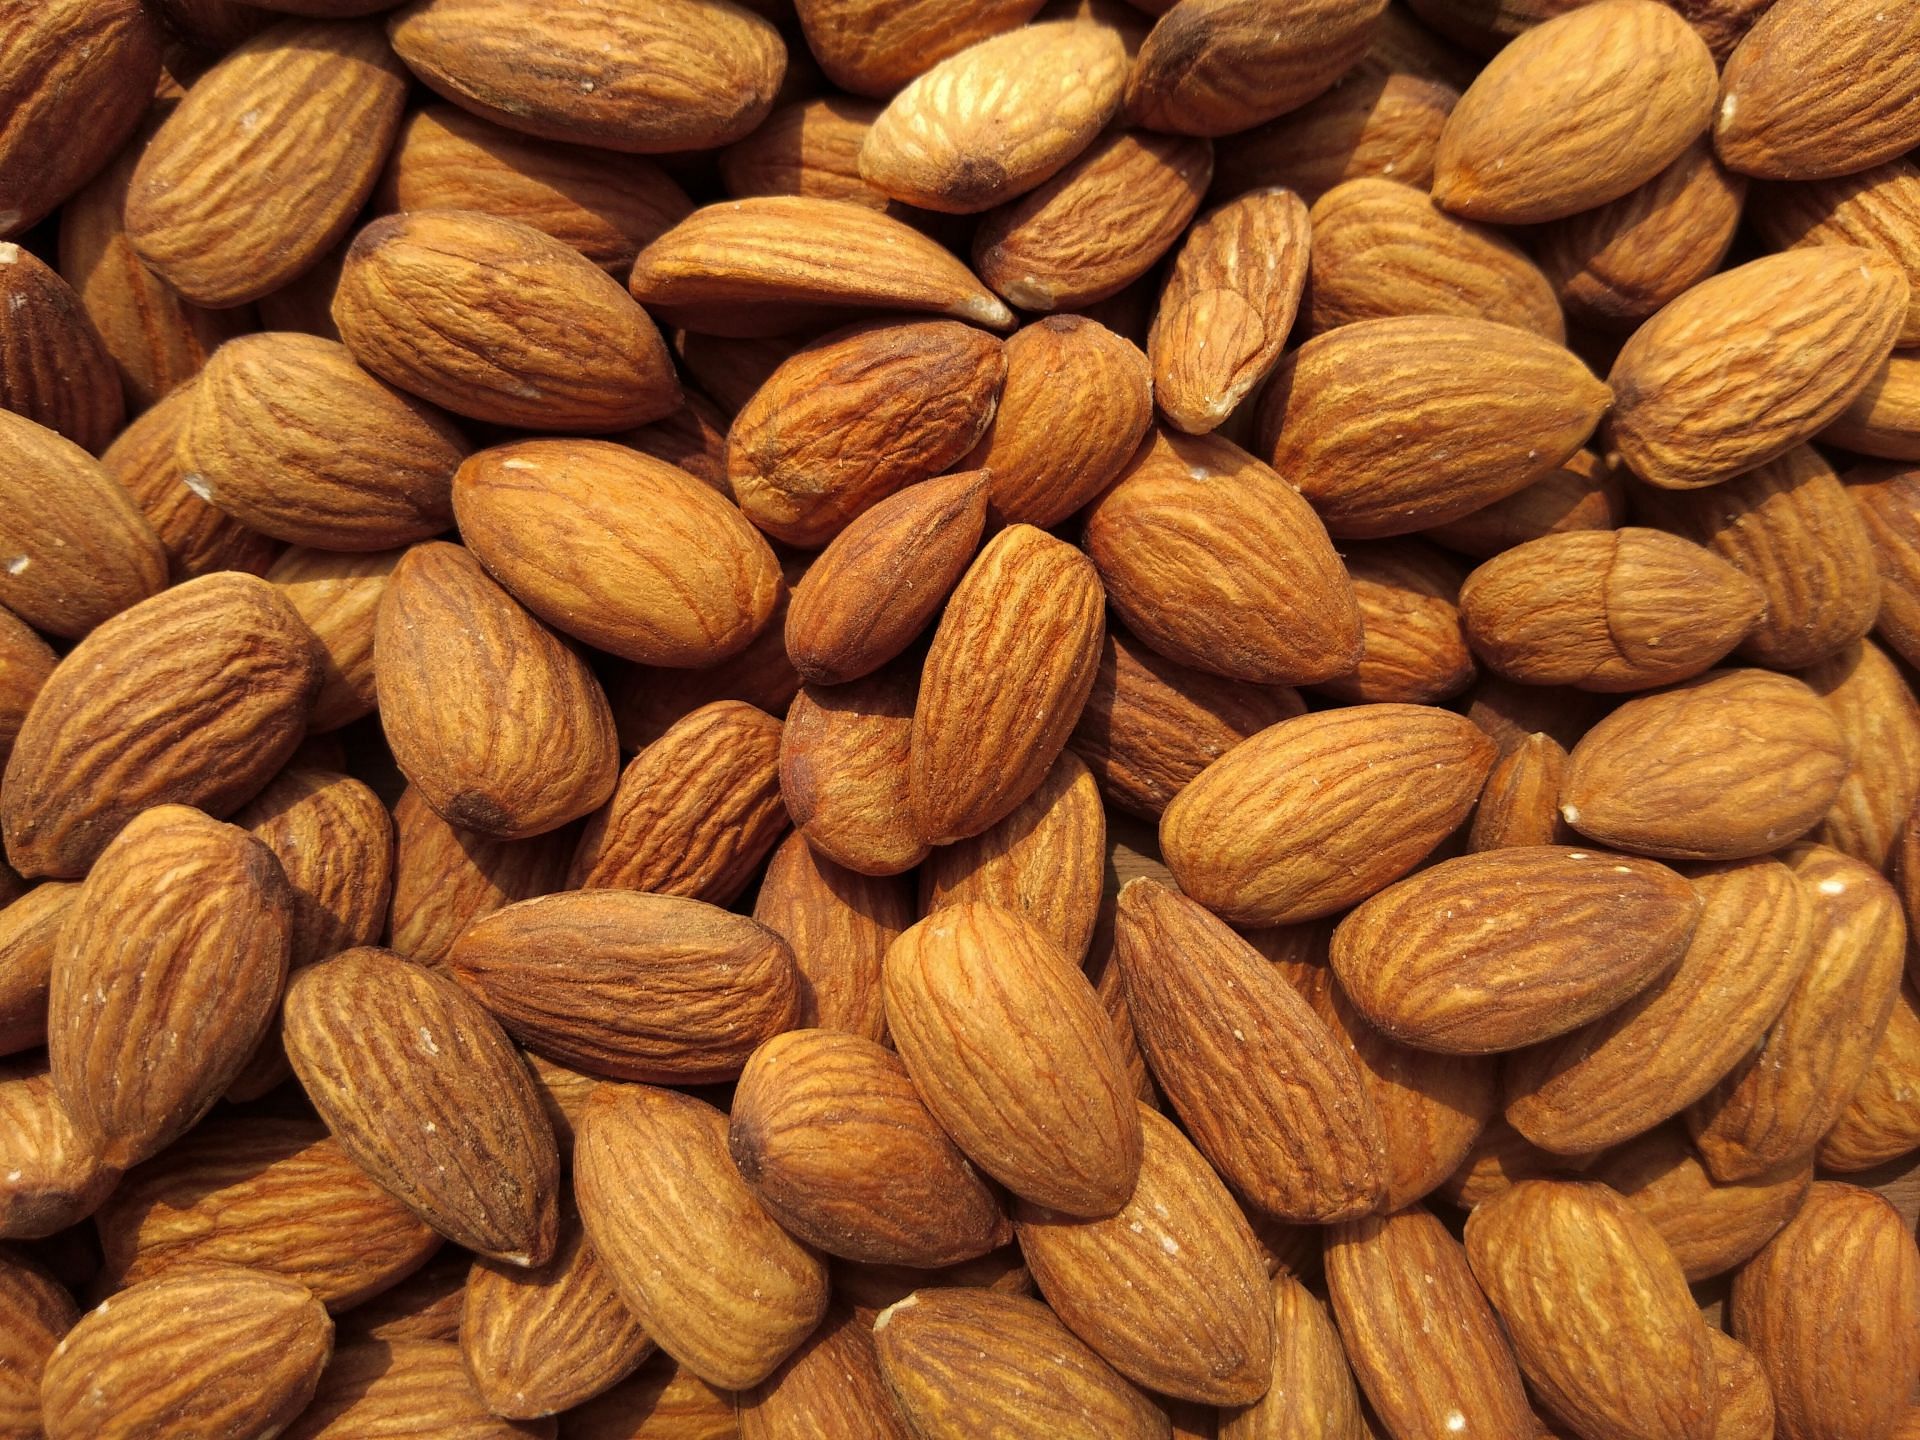 Almonds (Image via Unsplash/Avinash Kumar)